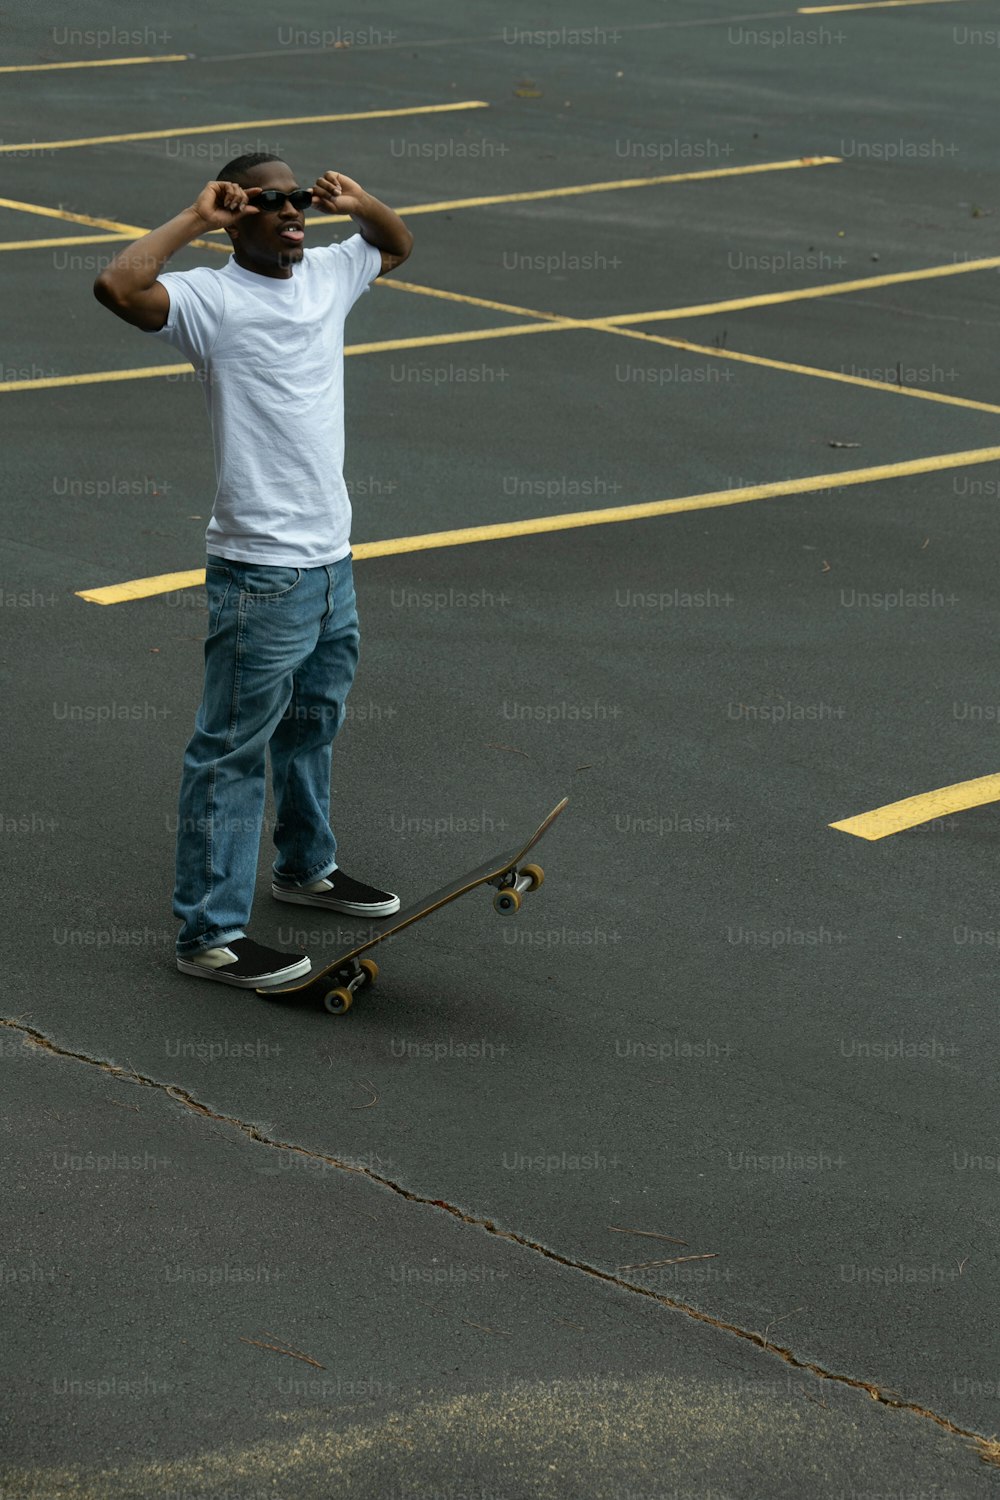 a man riding a skateboard in a parking lot